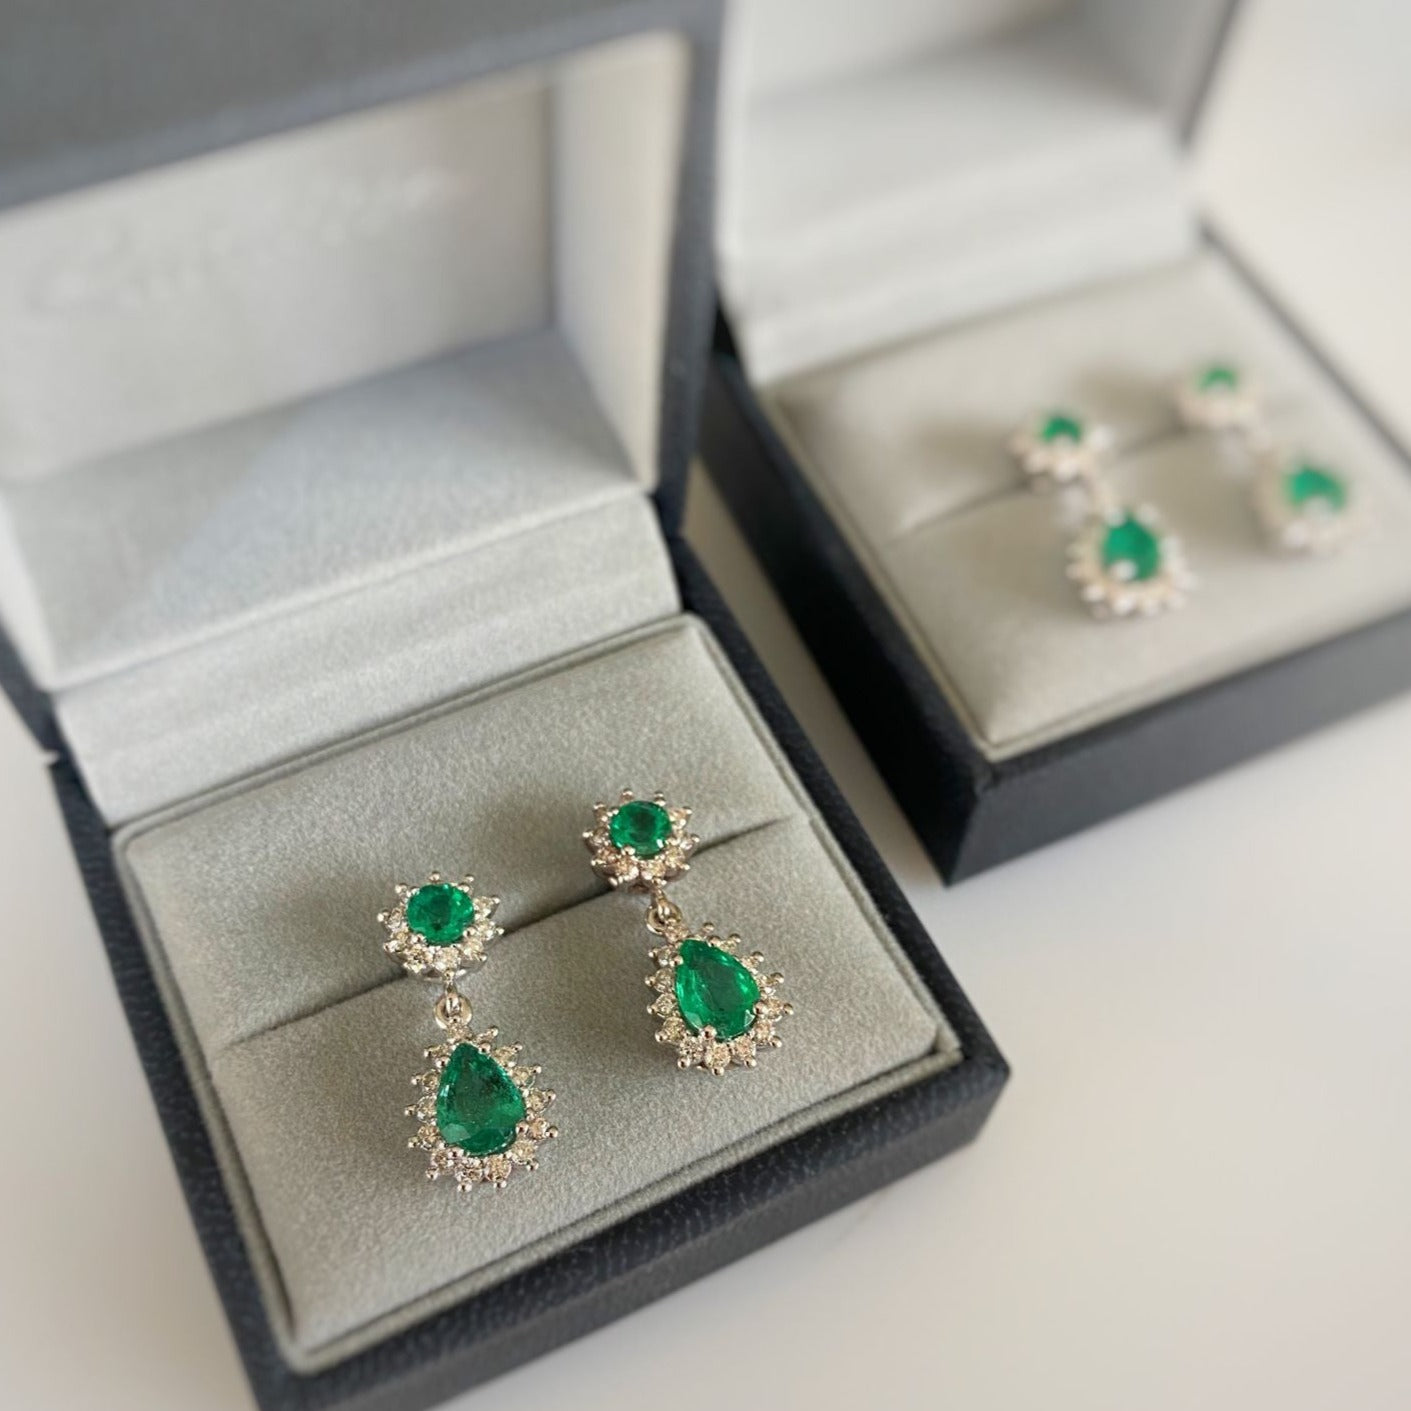 emerald and diamond earrings in earring jewellery box